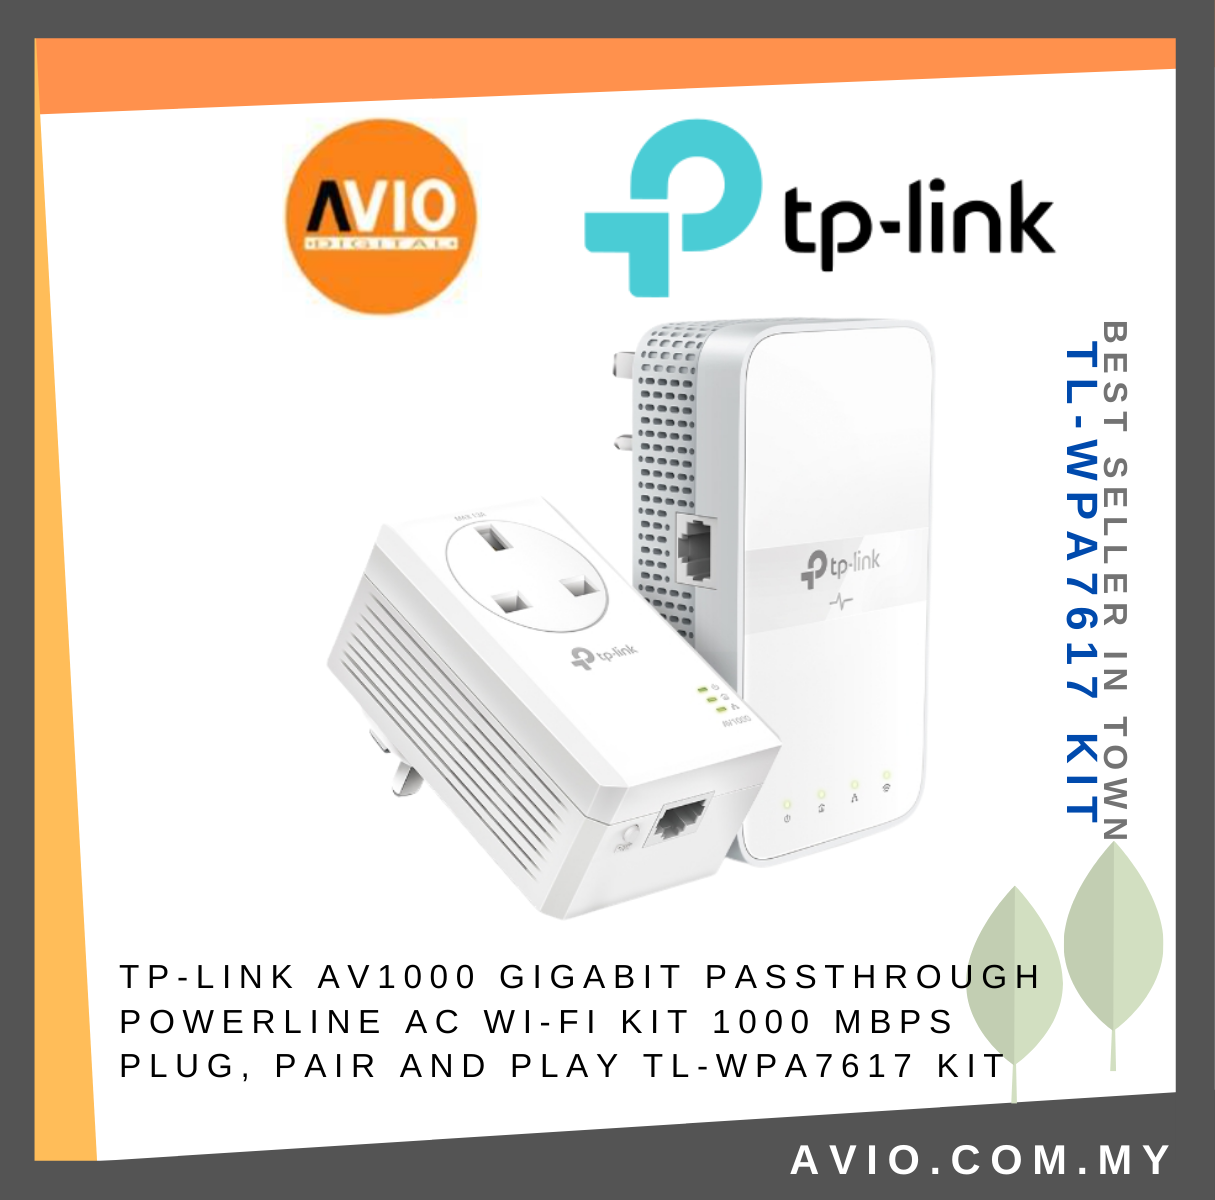 PLC TP-Link TL-WPA7617 KIT WIFI